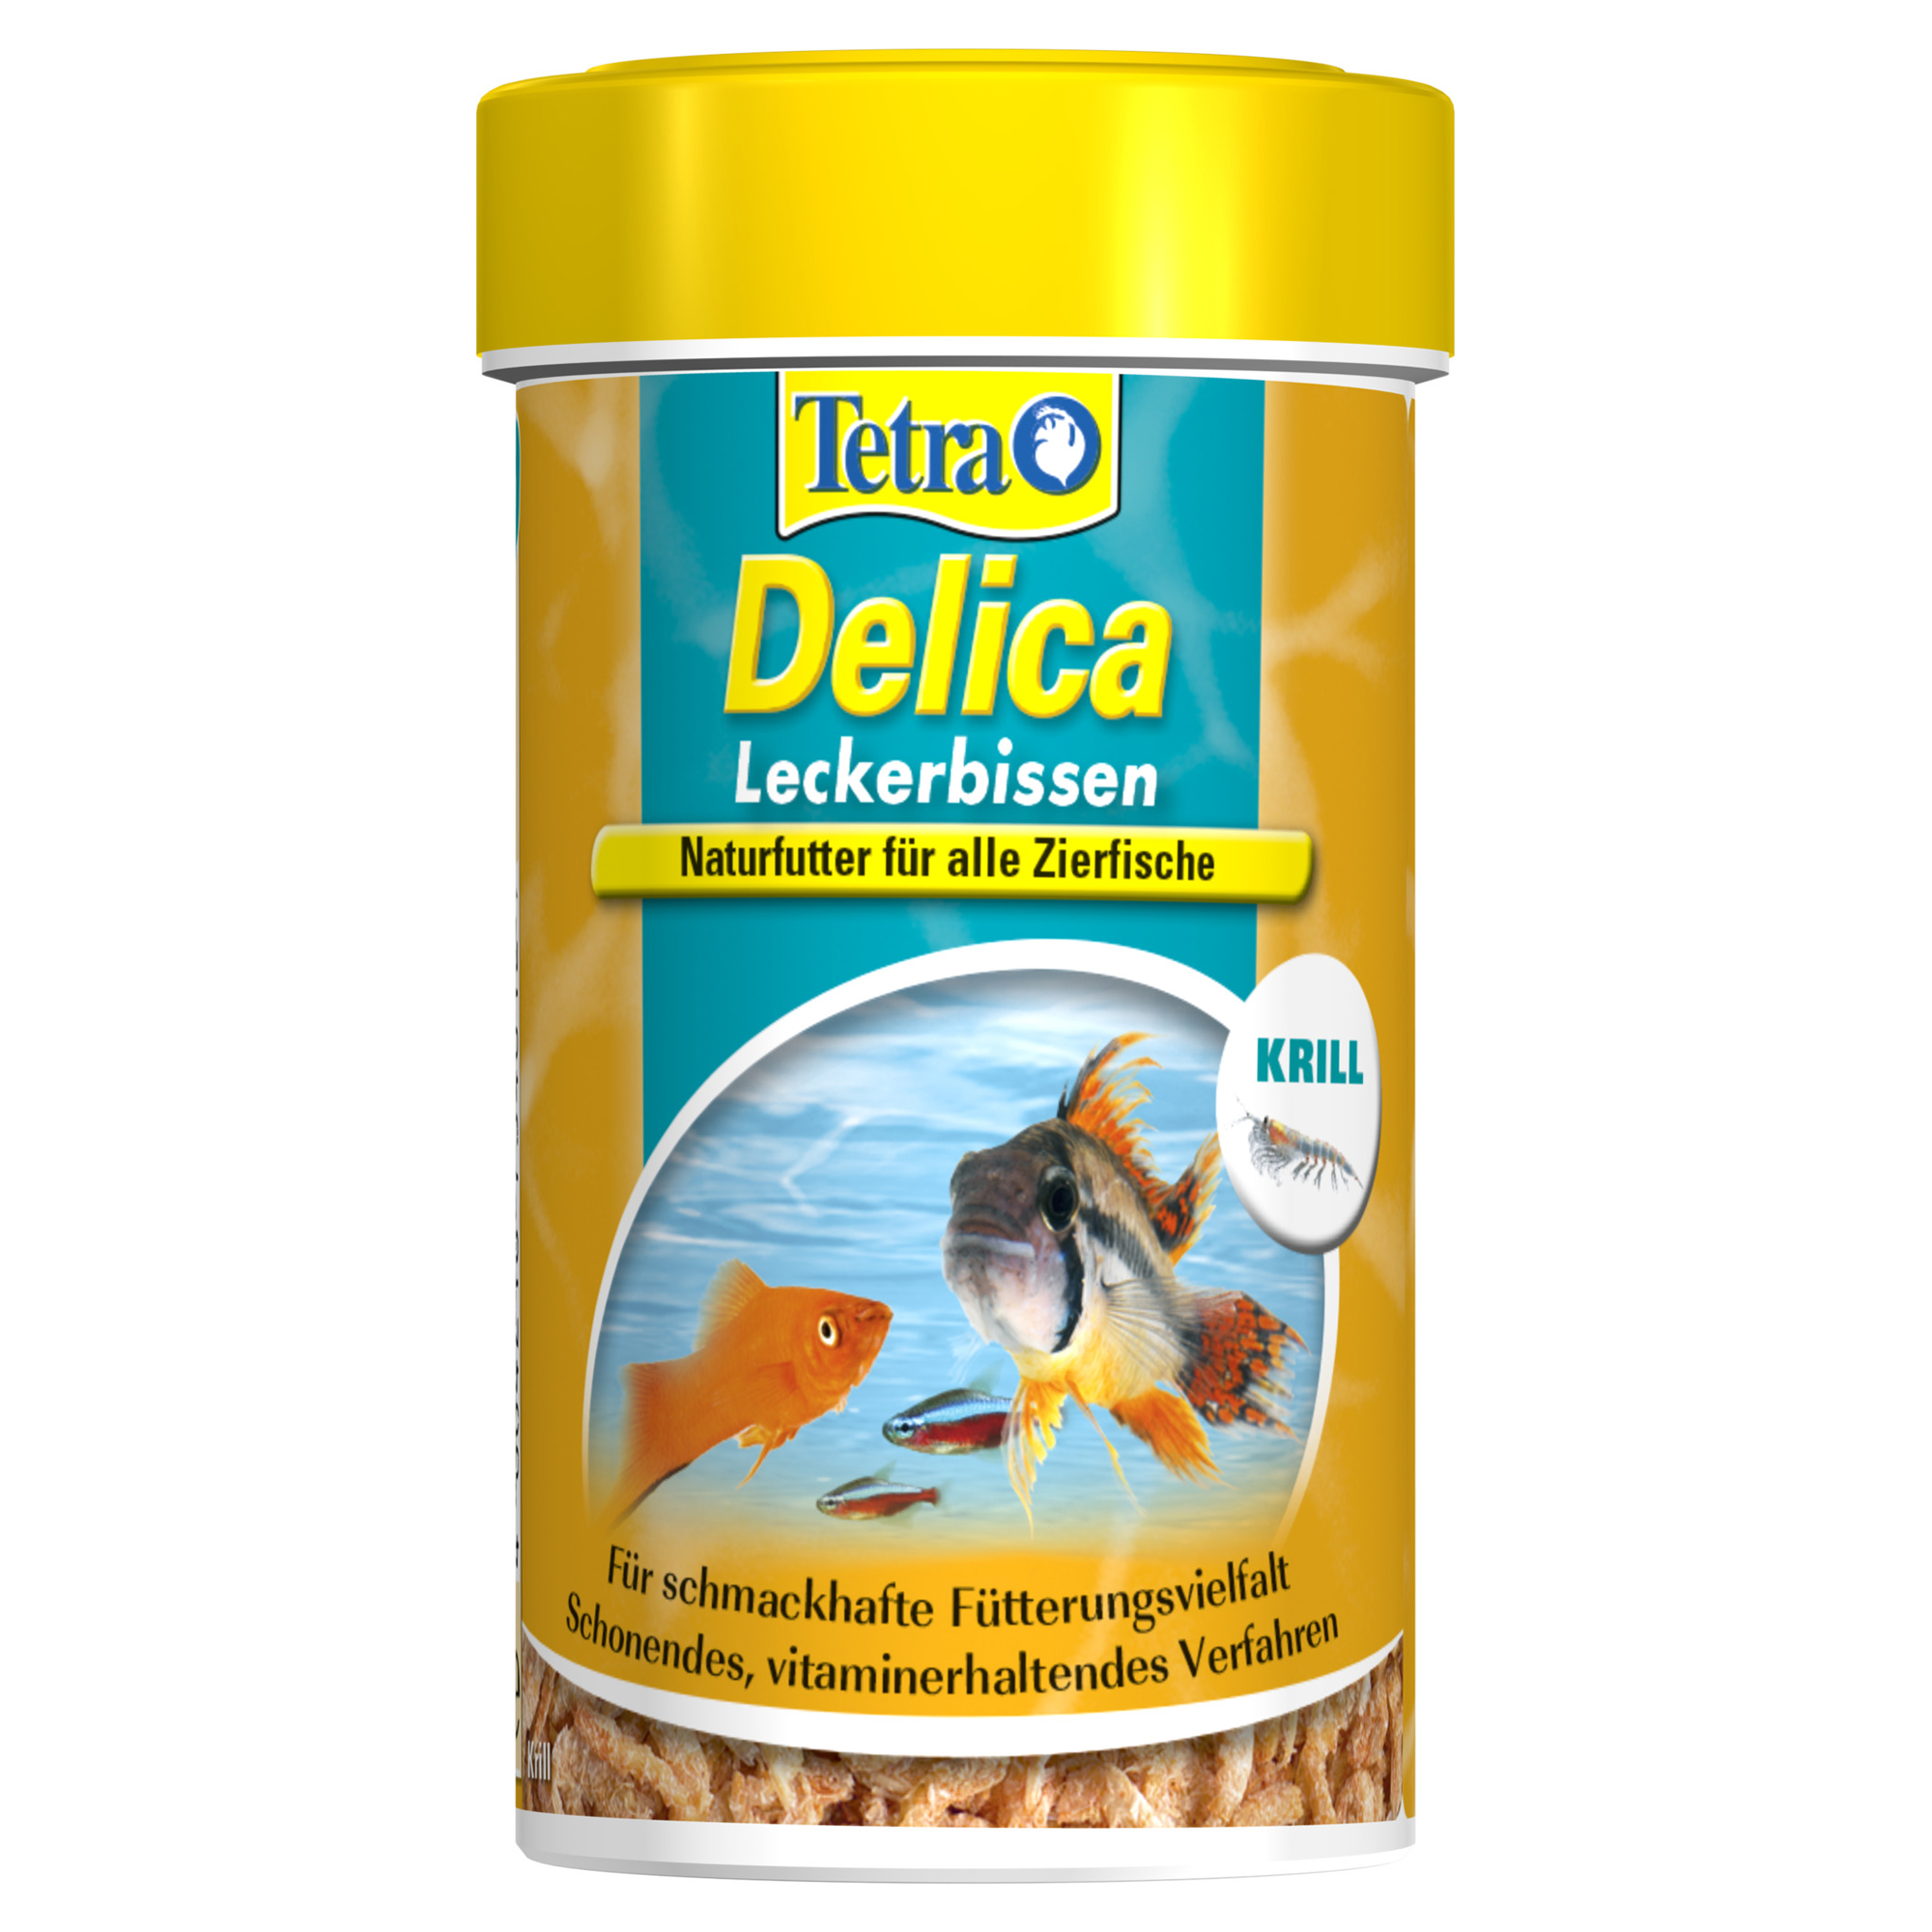 Fischfutter "Delica Leckerbissen" 100 ml Krill + product picture